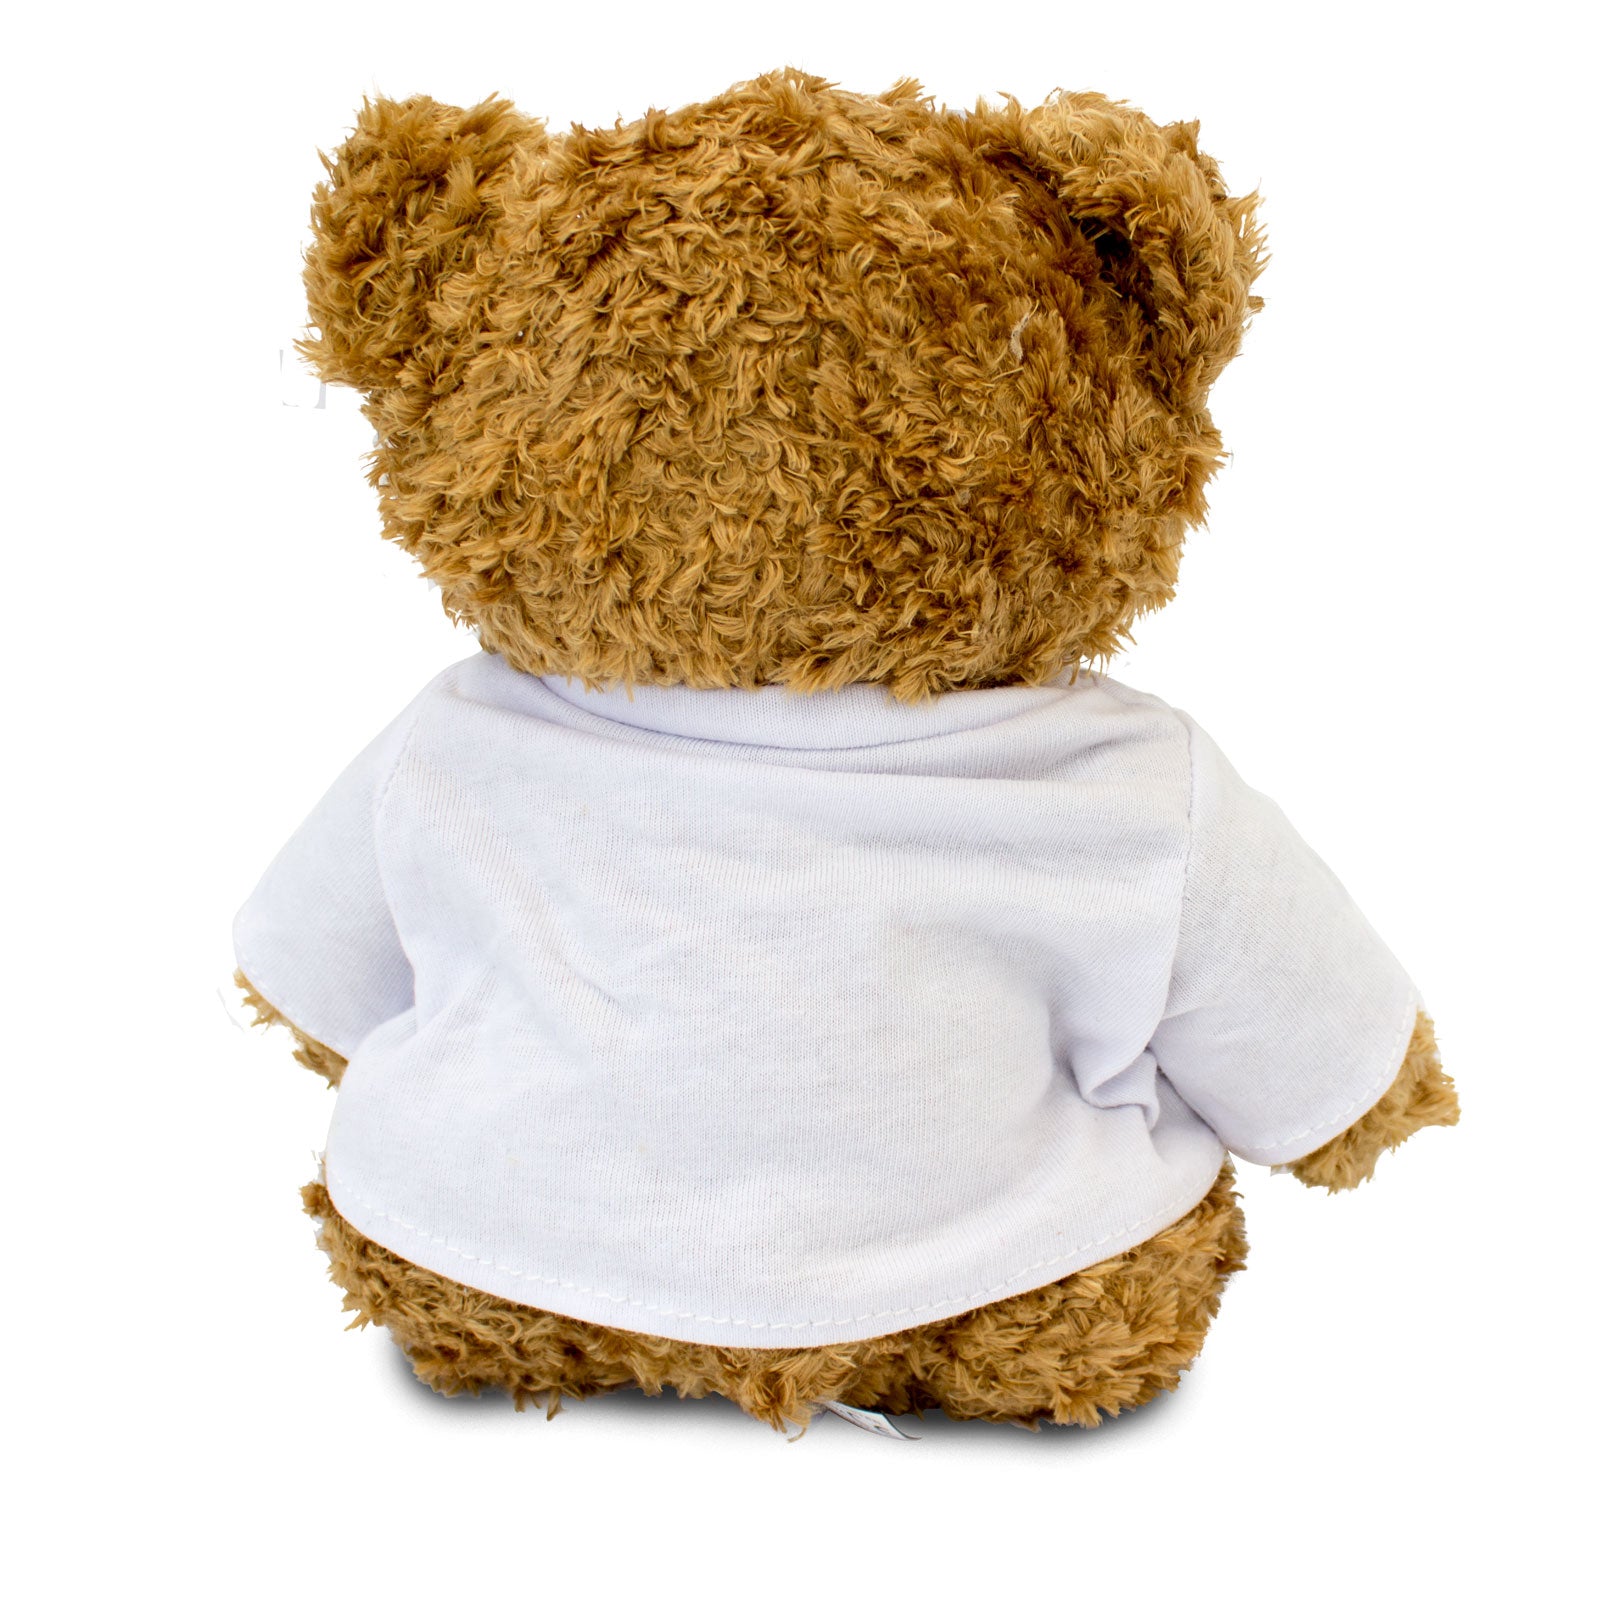 Get Well Soon Emmett - Teddy Bear